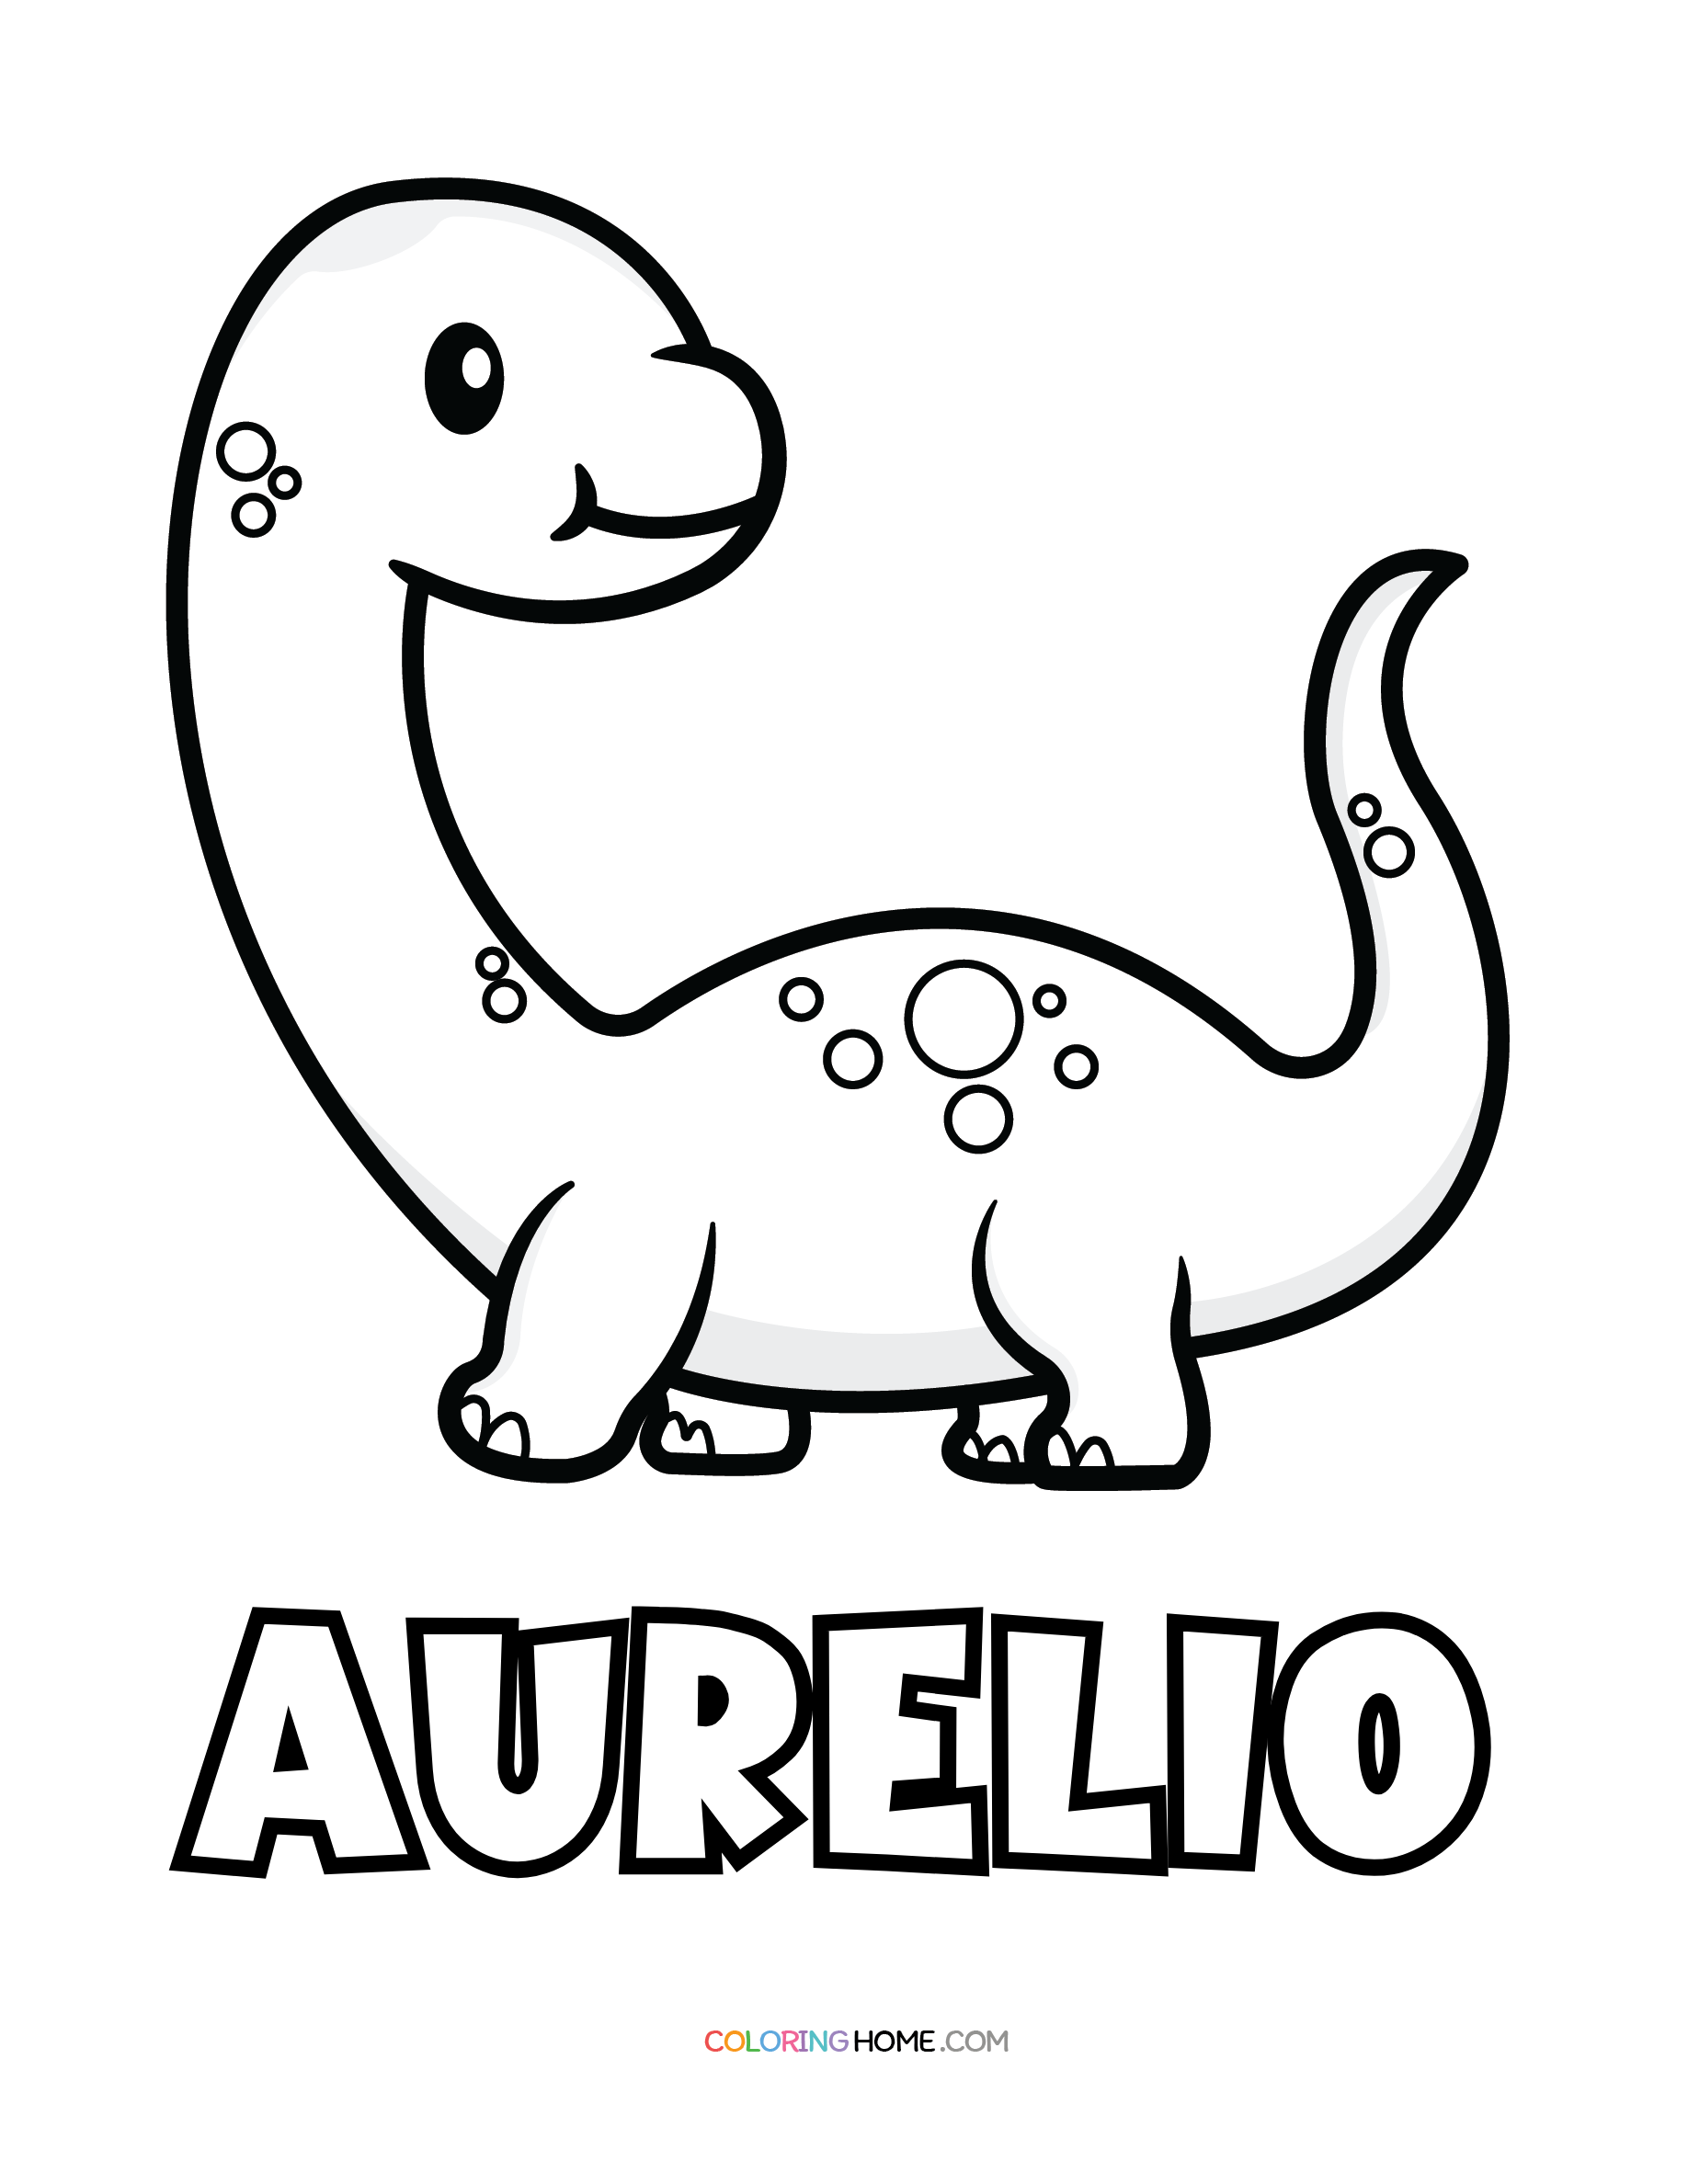 Aurelio dinosaur coloring page